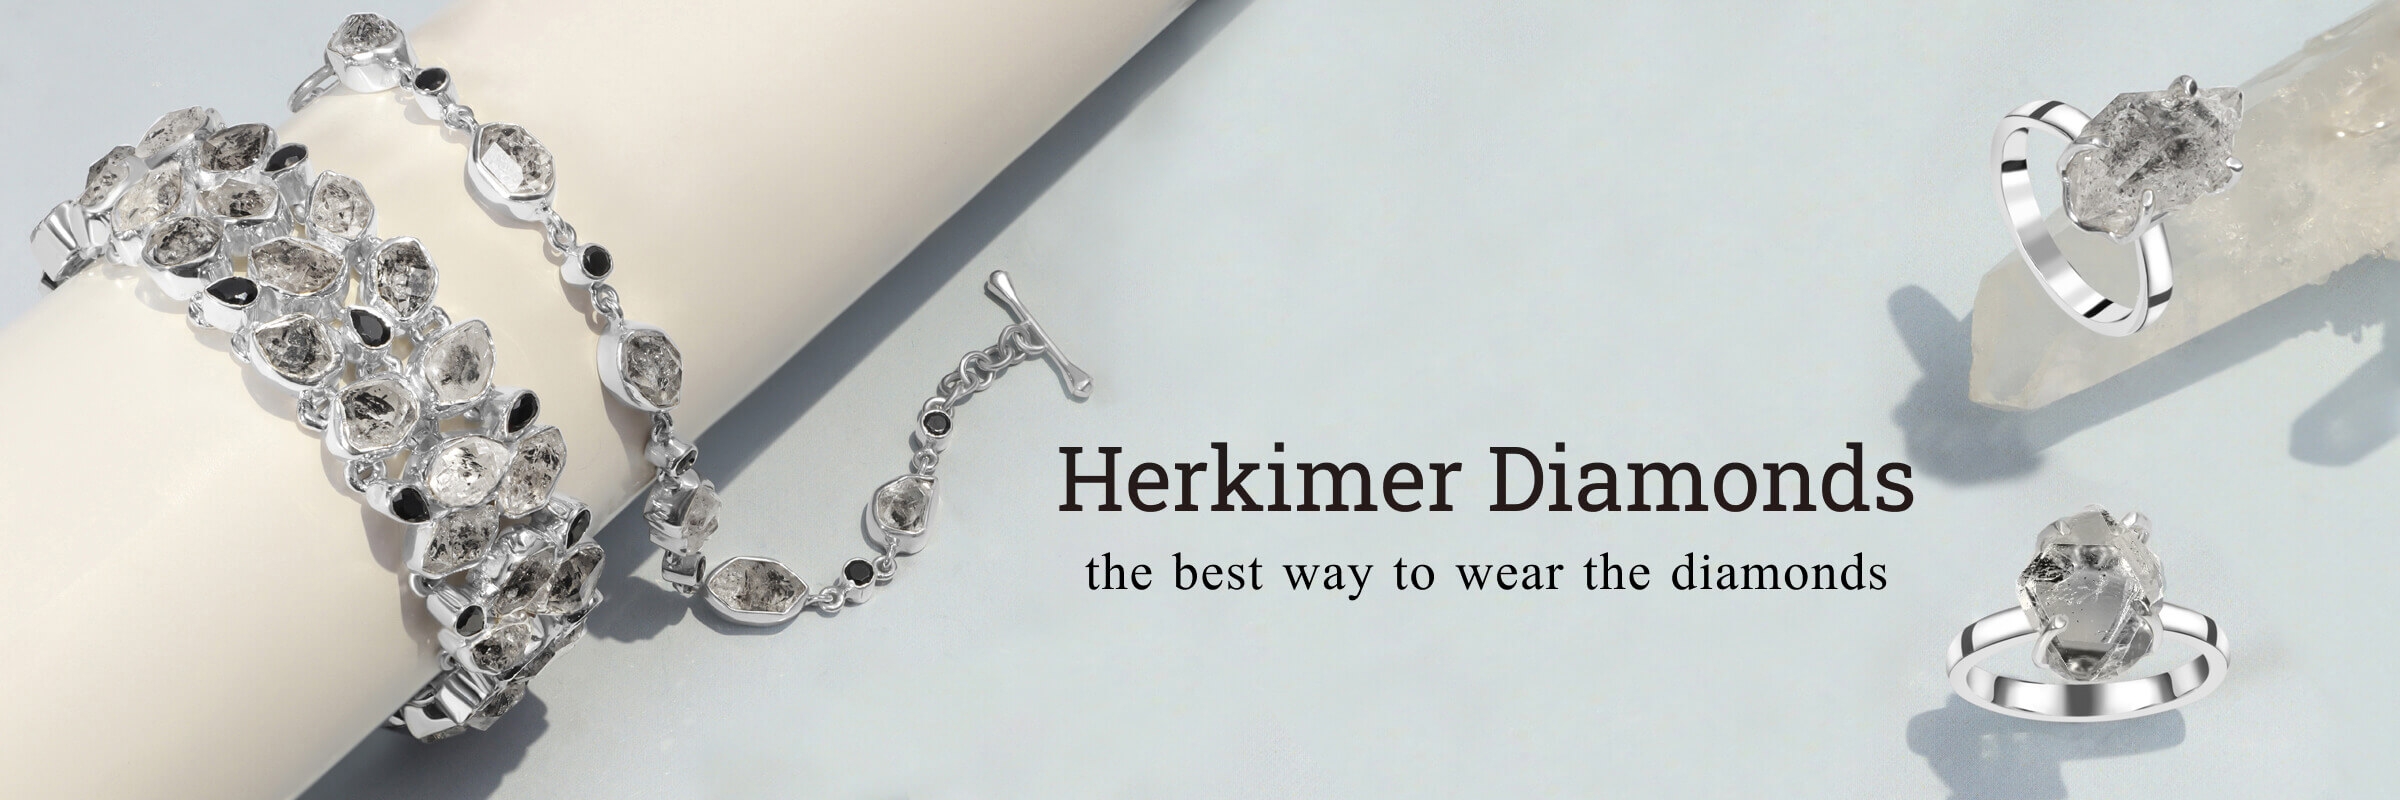 Herkimer Diamonds - the best way to wear the diamonds